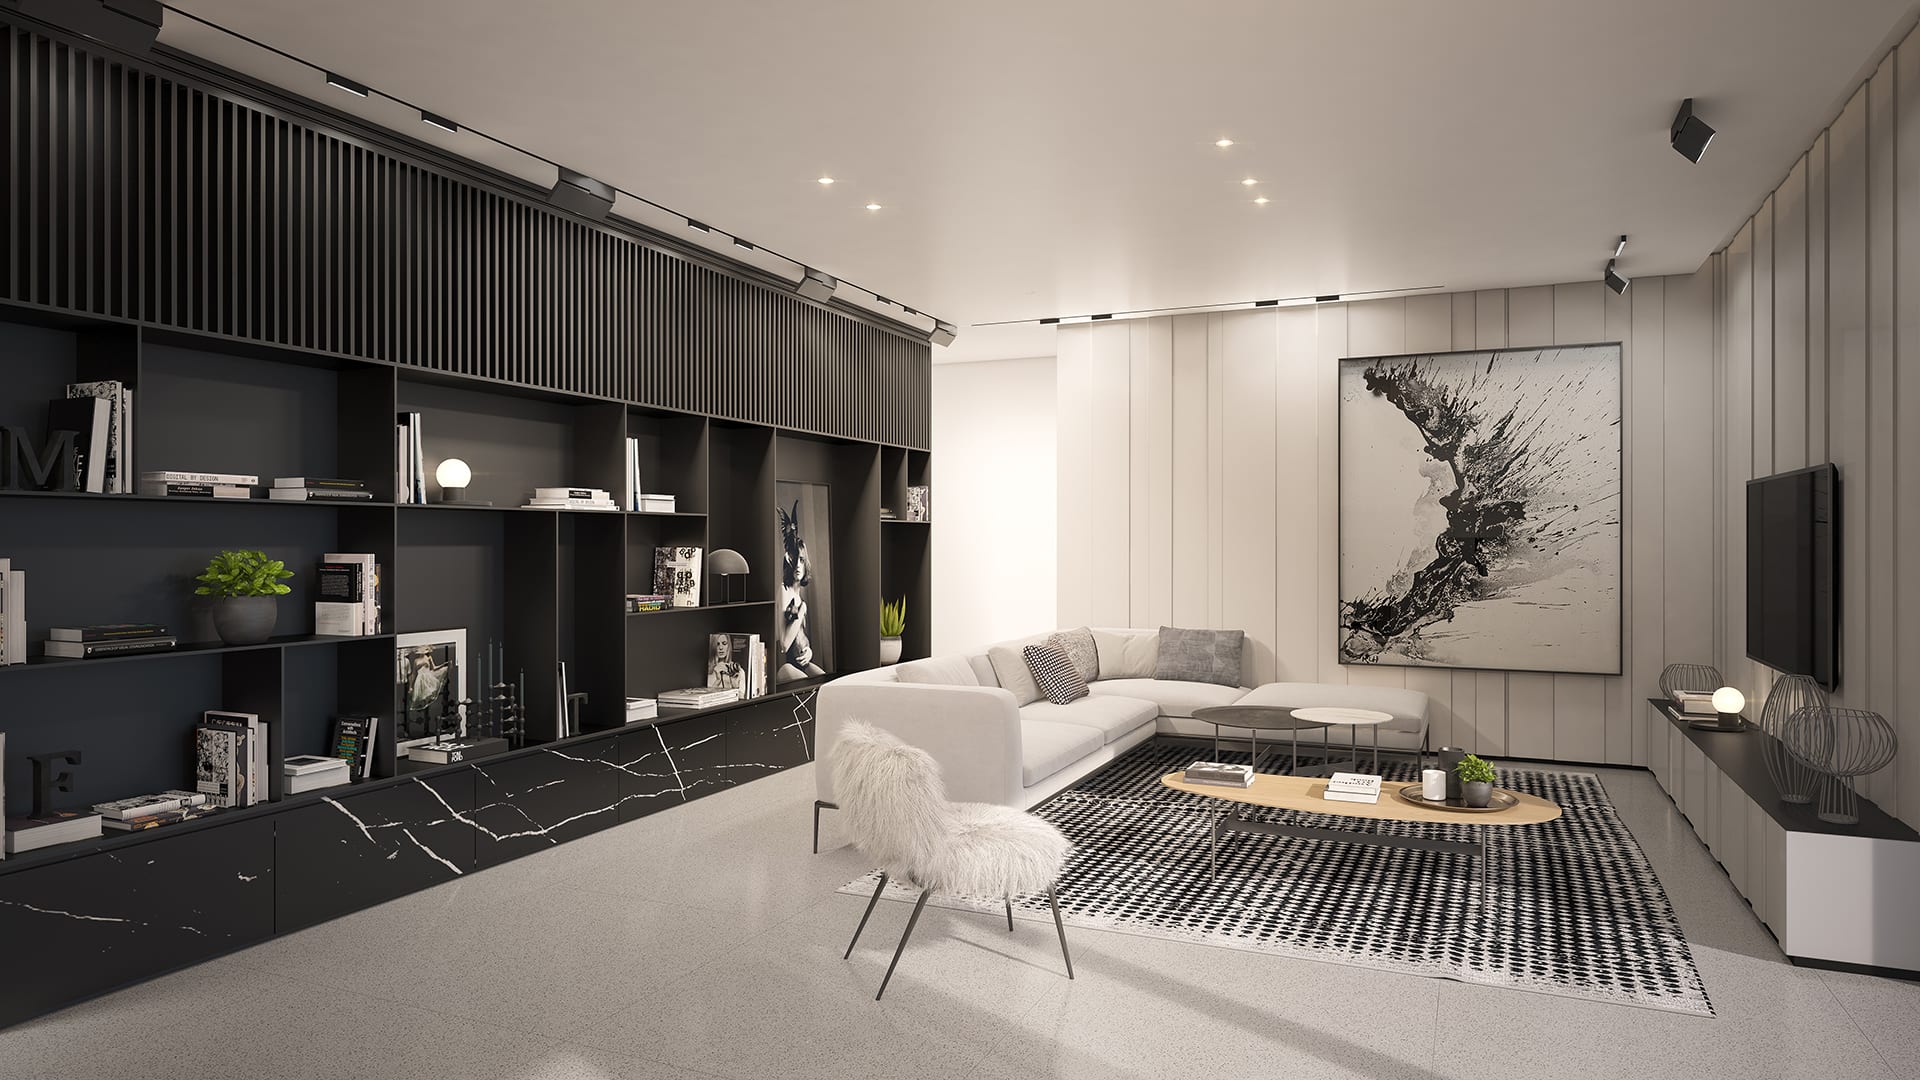 Maayan-Golan_Architectural-Visualization_apartment_kitchen-living-room-visualization_interior-design-sharon-maayan_03